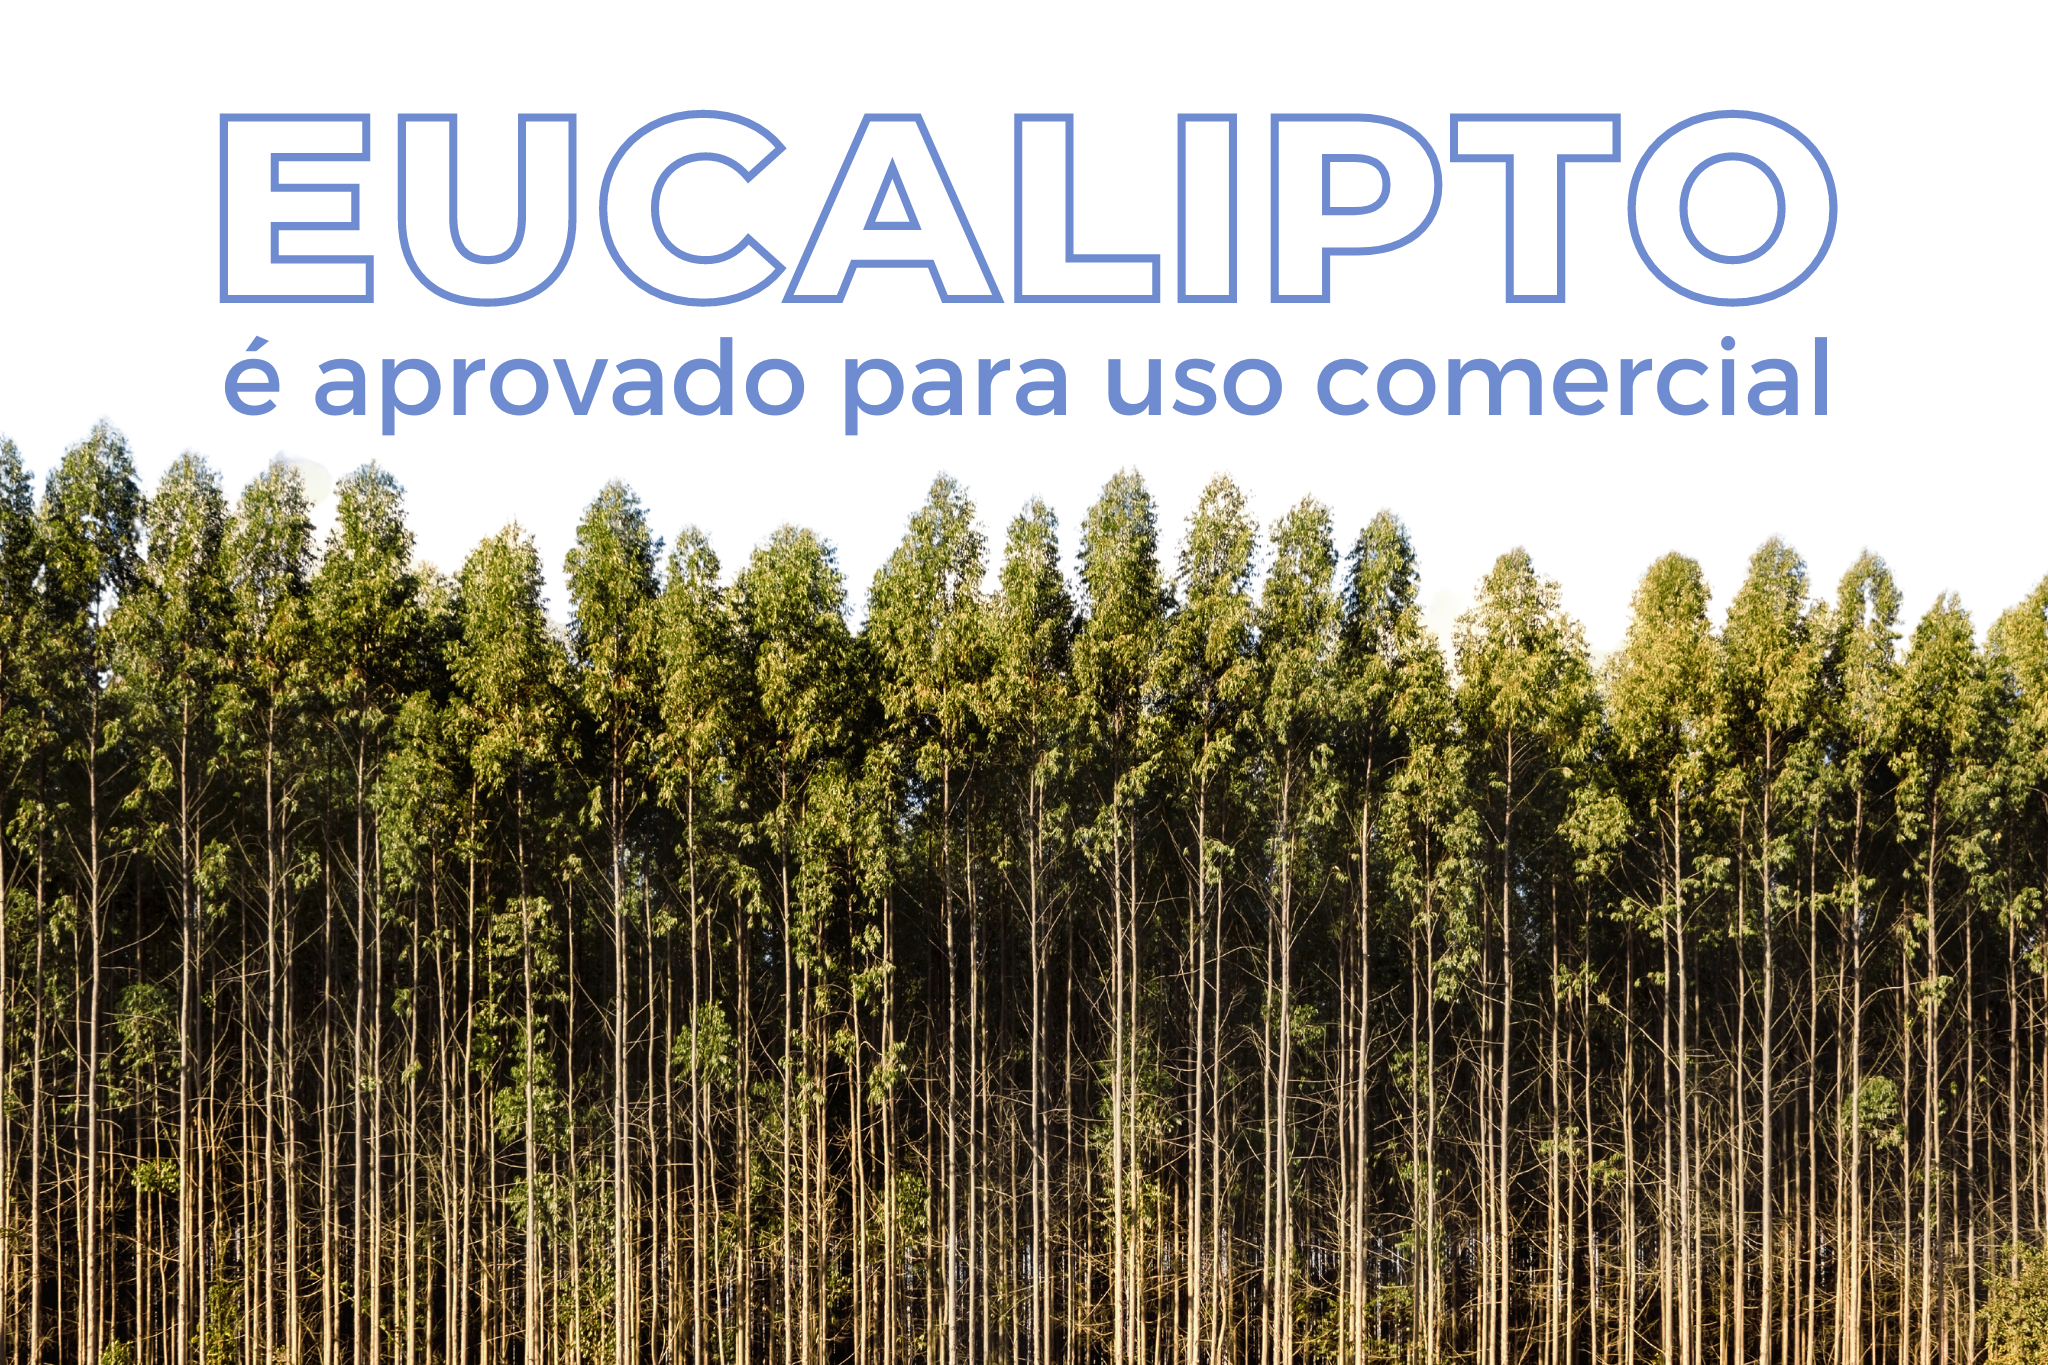 Eucalipto desenvolvido pela FuturaGene (Suzano) é aprovado pela CTNBio para uso comercial